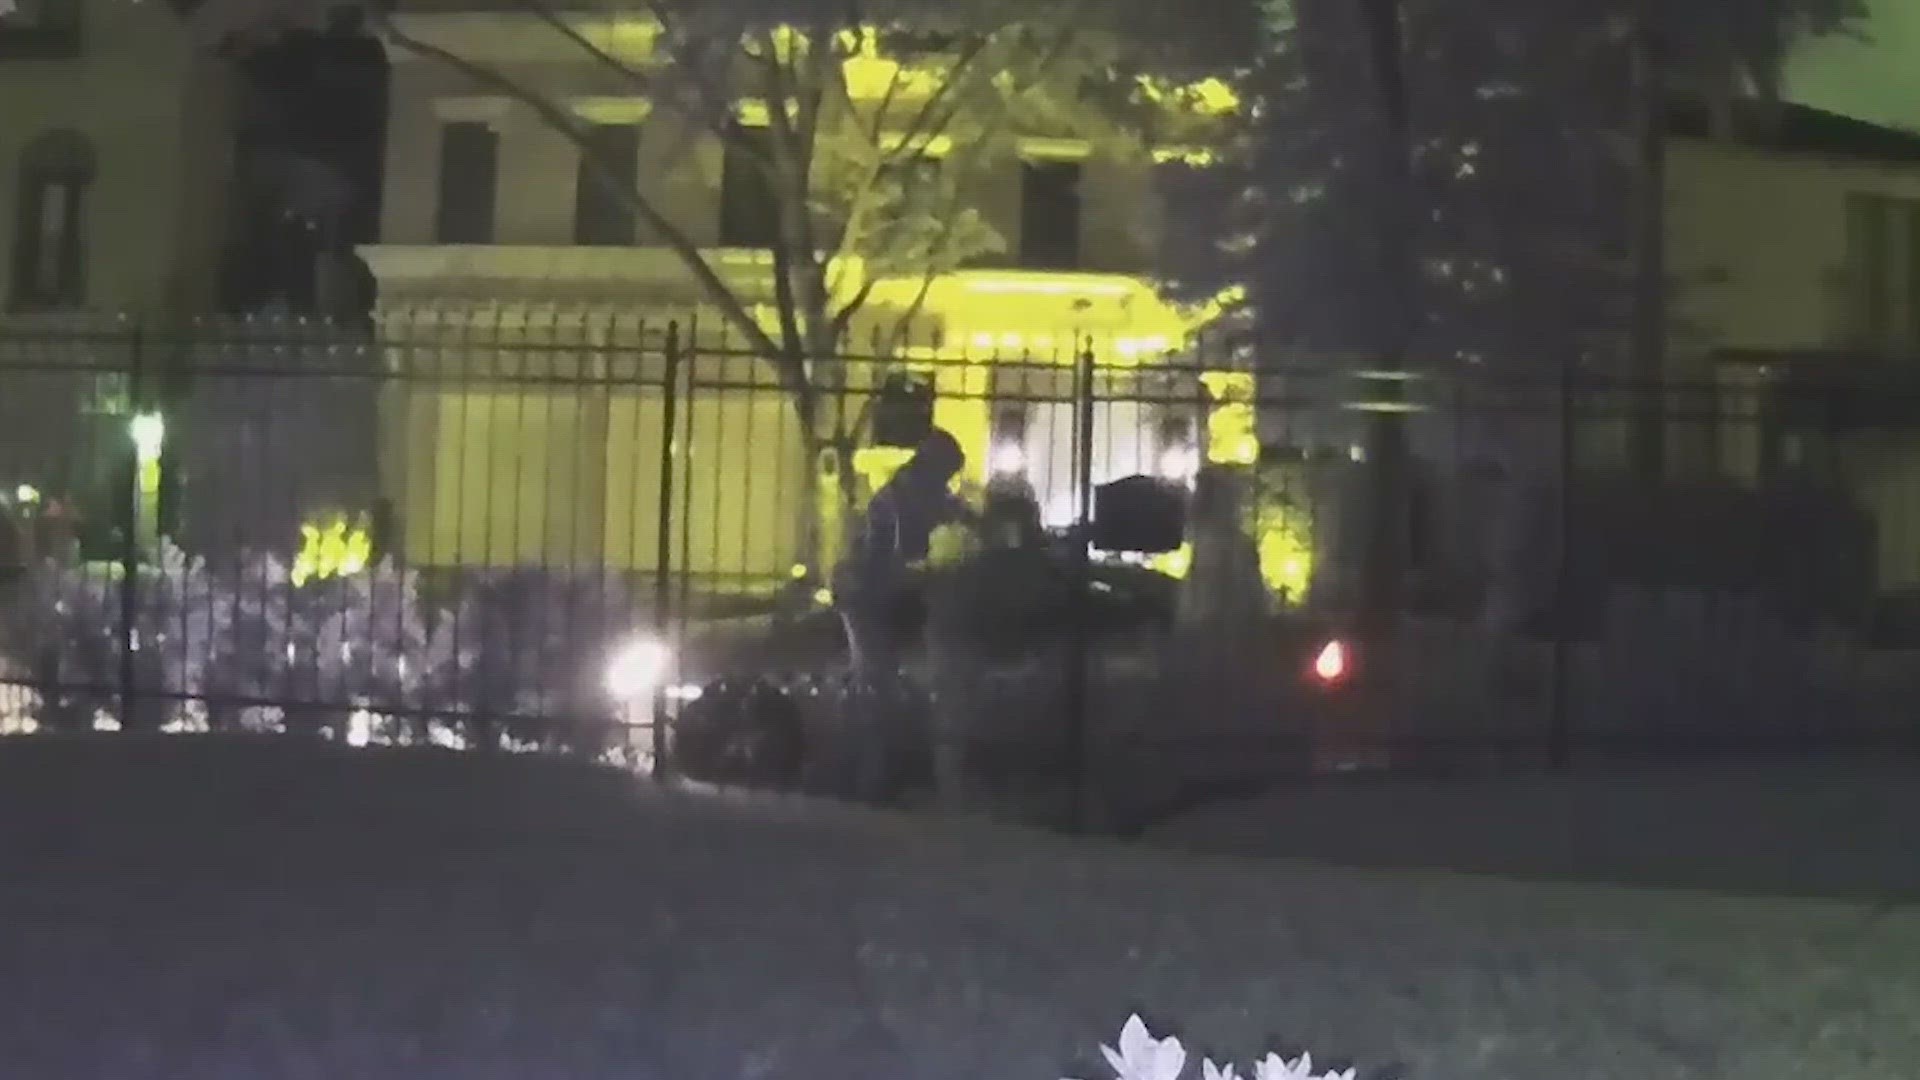 Video shows pizza delivery driver attacked near River Oaks | wltx.com